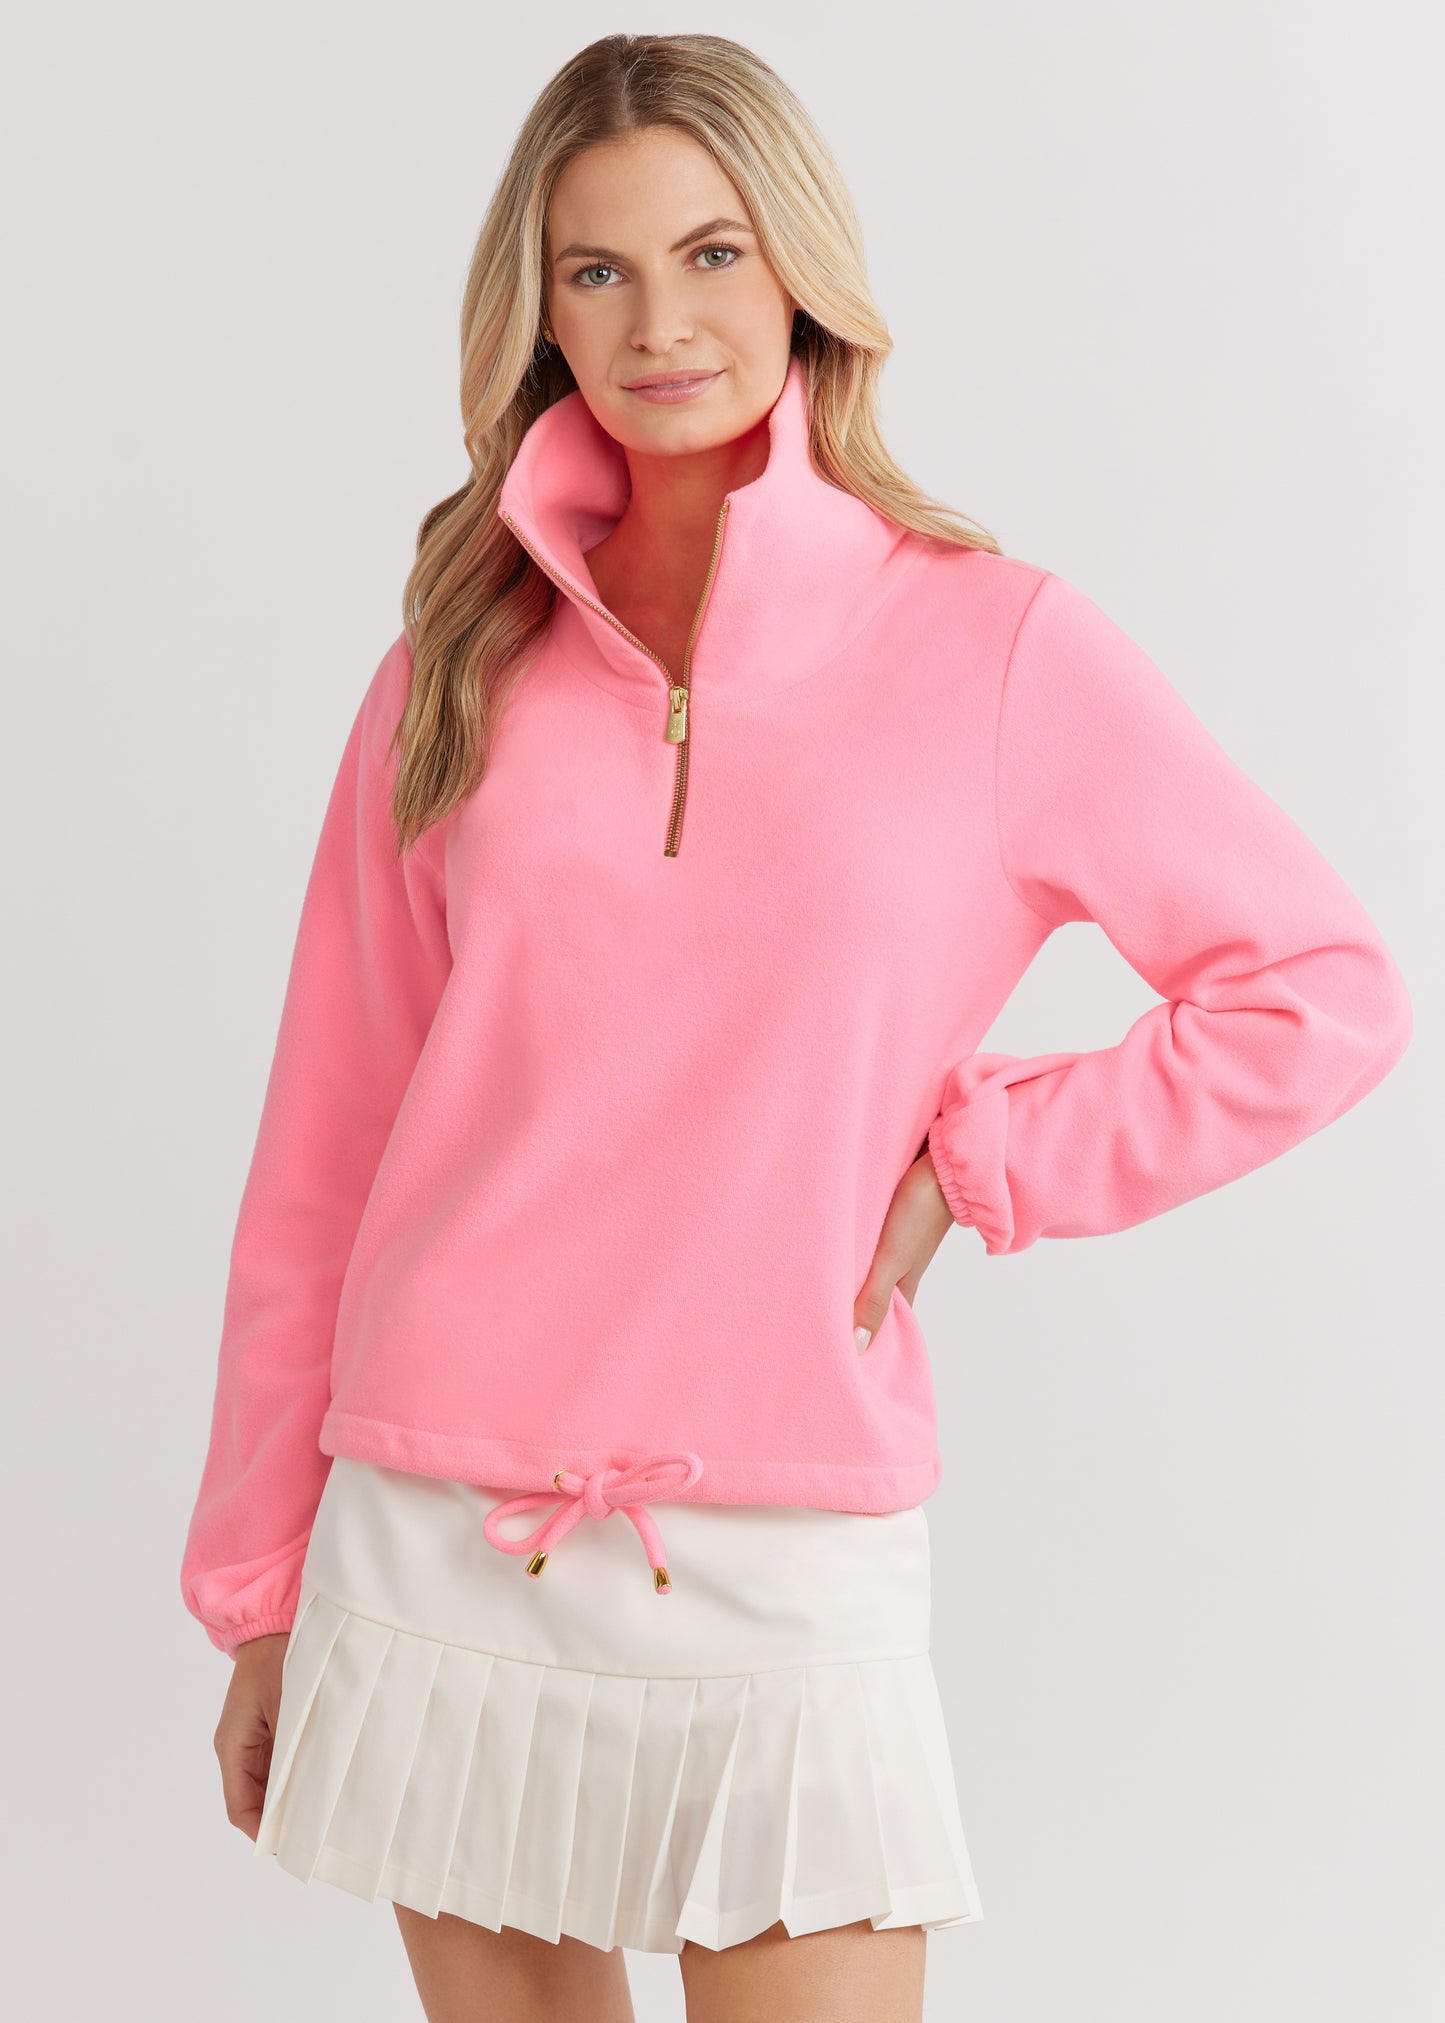 Boardwalk Pullover in Terry Fleece (Cotton Candy)